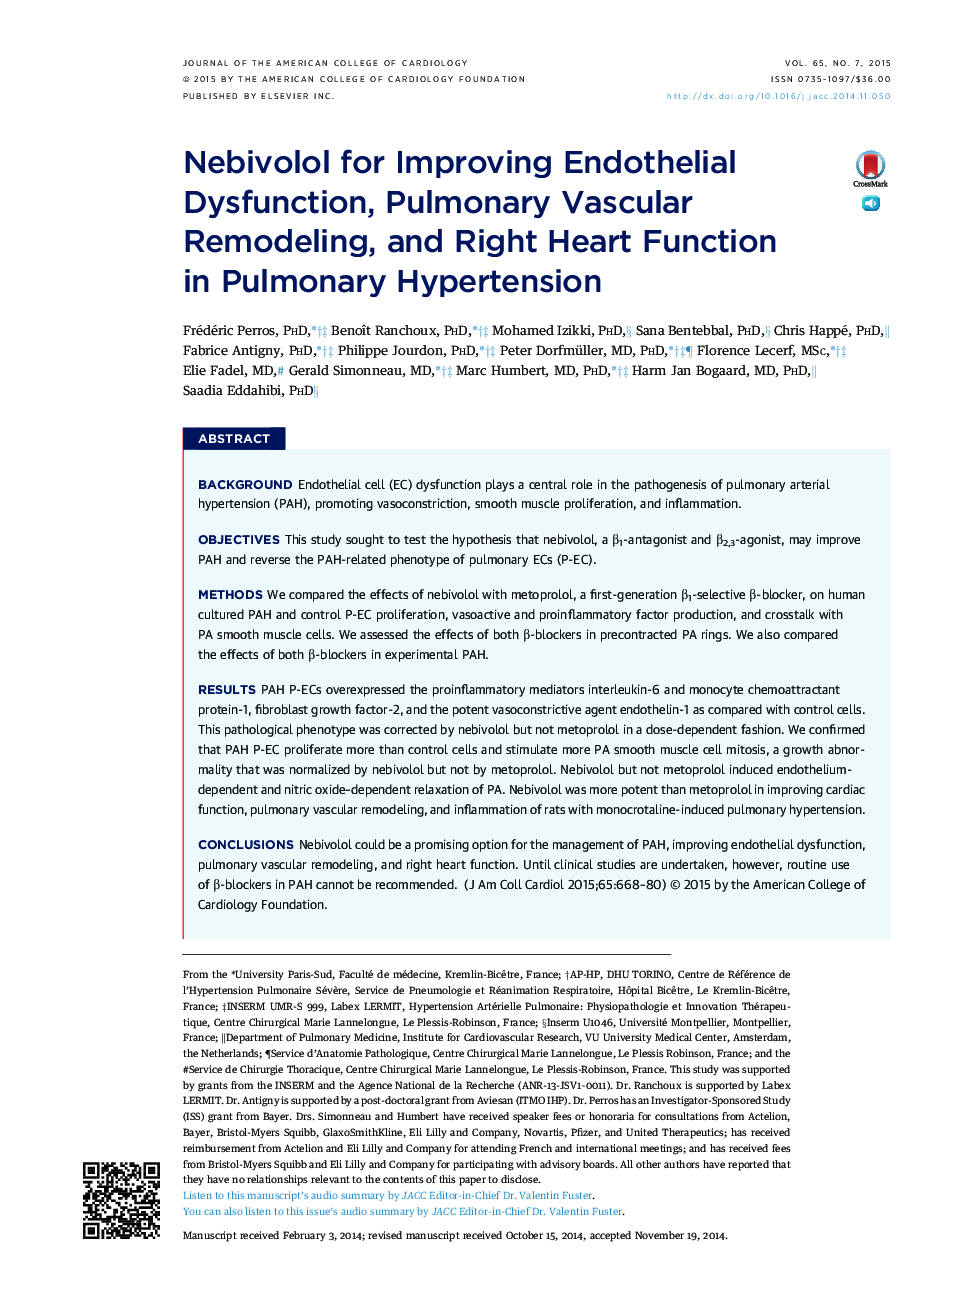 Nebivolol for Improving Endothelial Dysfunction, Pulmonary Vascular Remodeling, and Right Heart Function in Pulmonary Hypertension 